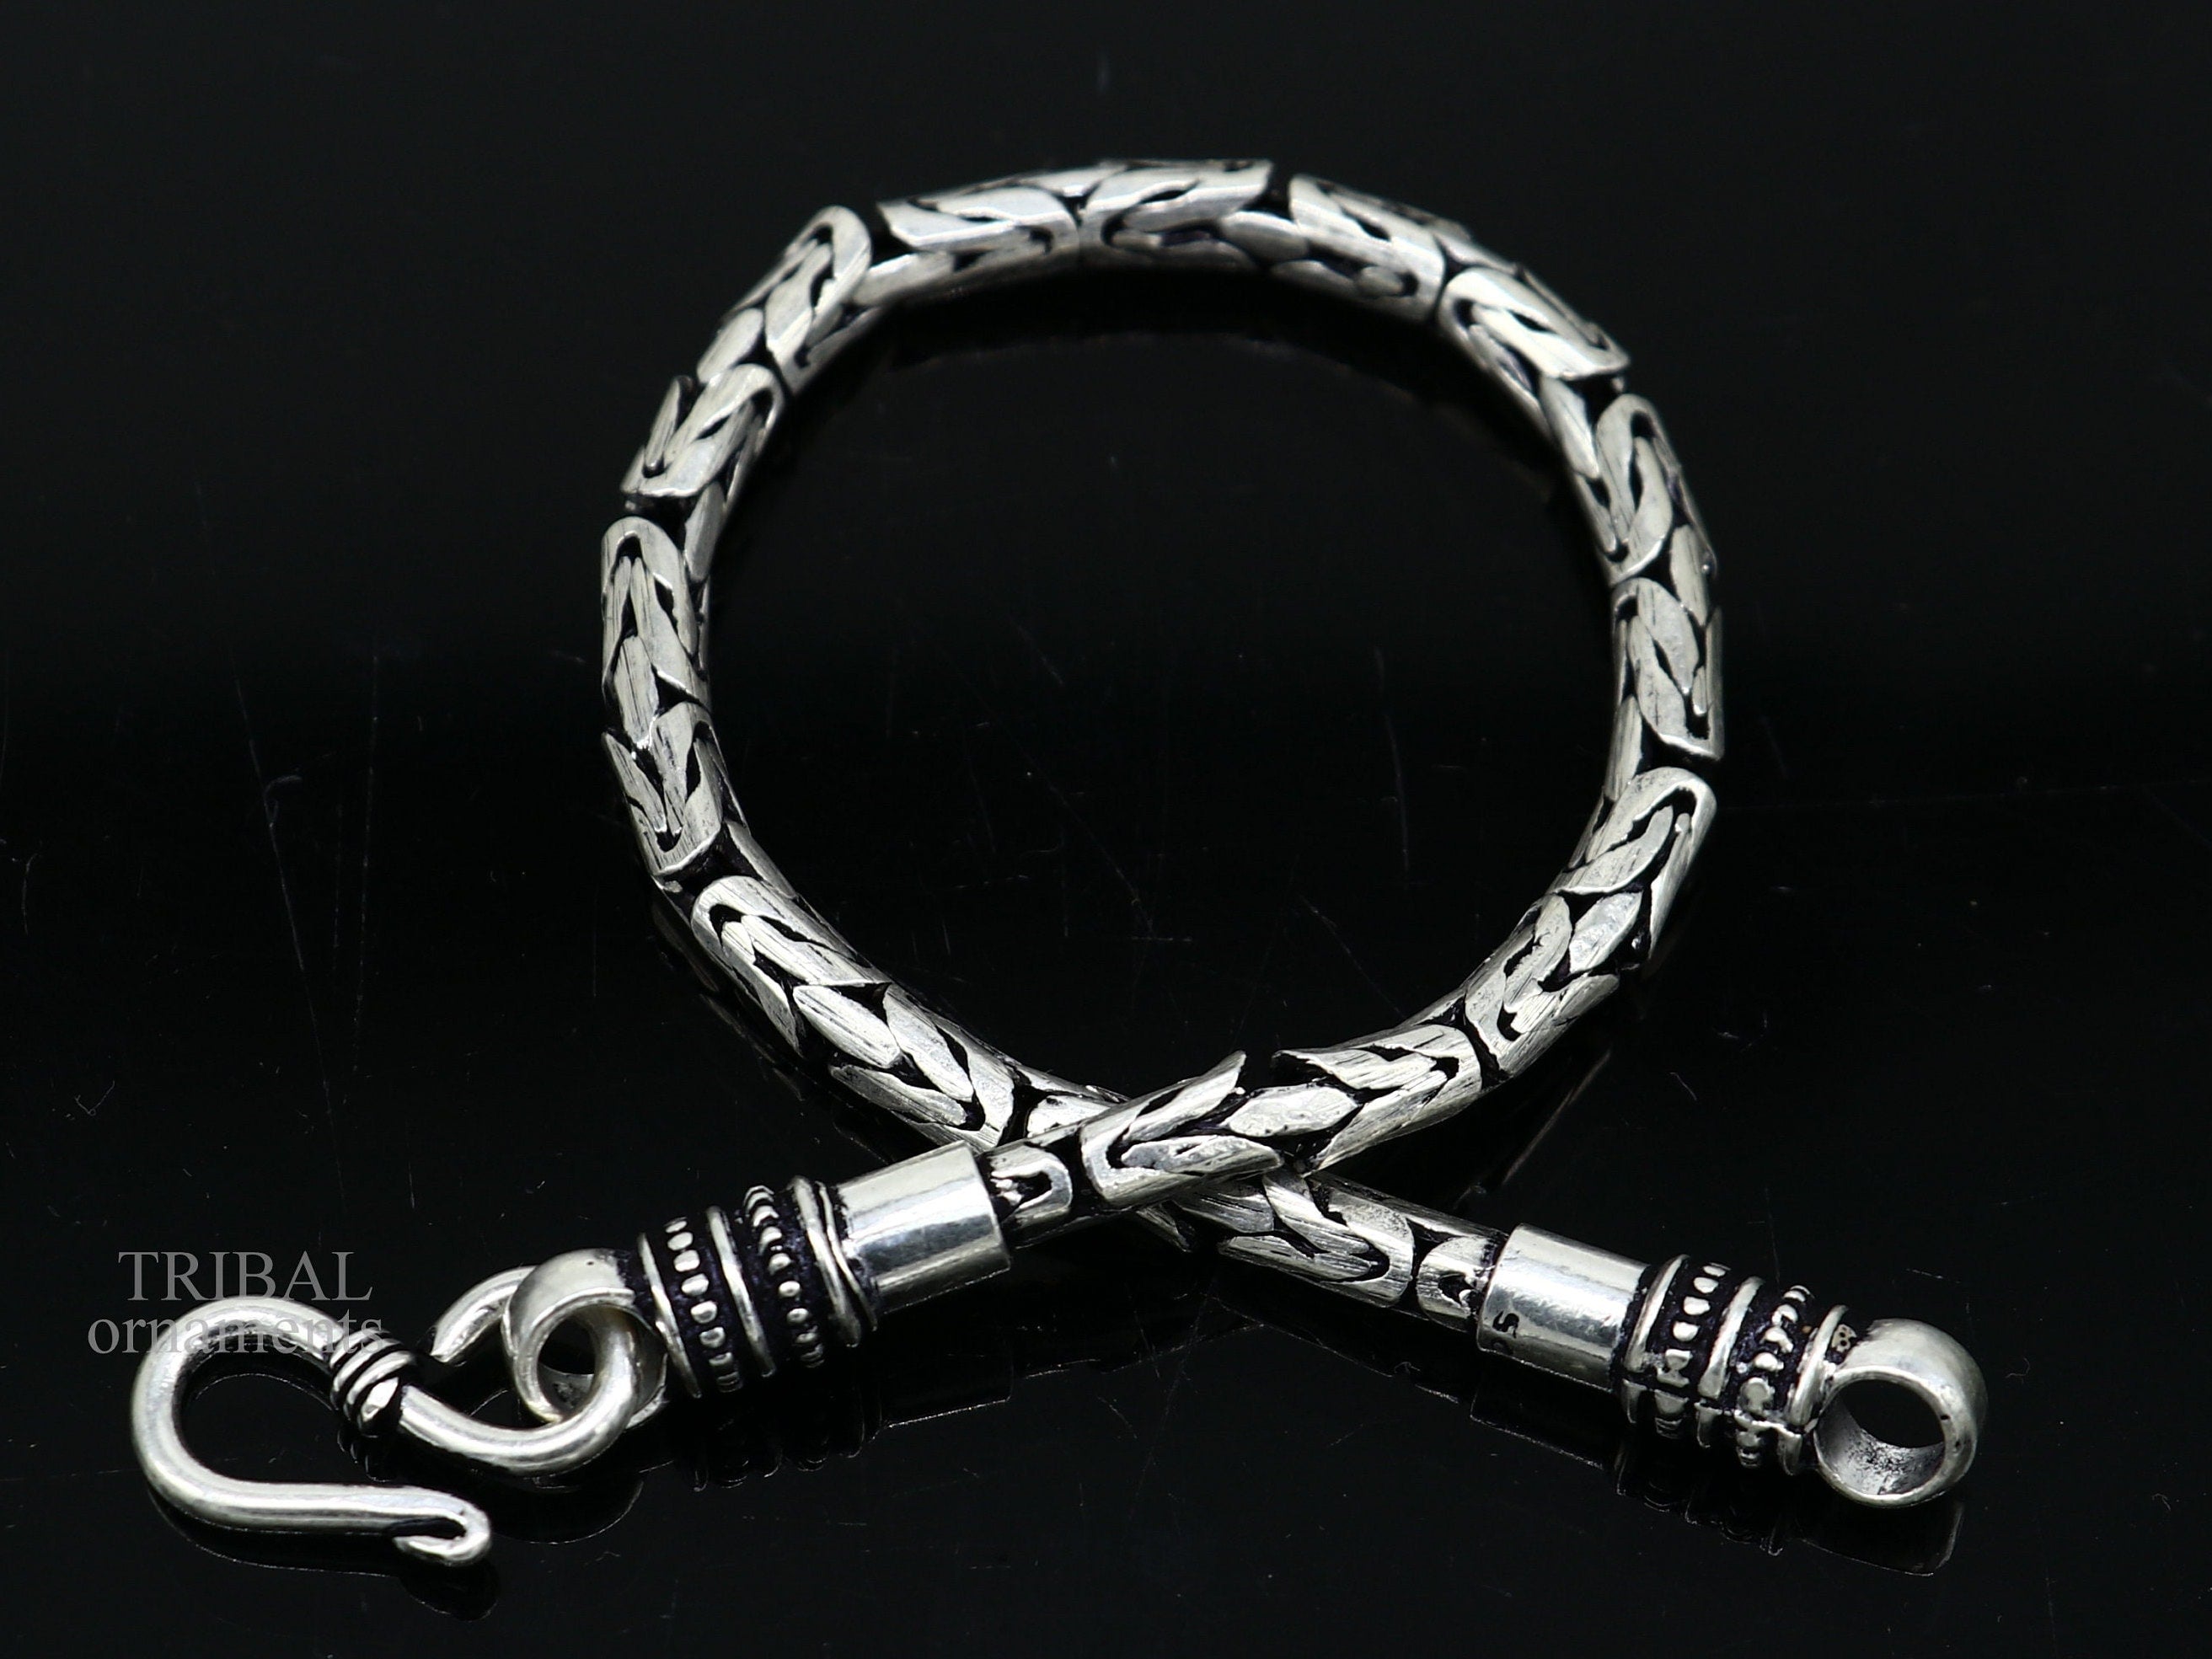 Men's Sterling Silver Chain Bracelet from Bali - Magic Conjurer | NOVICA